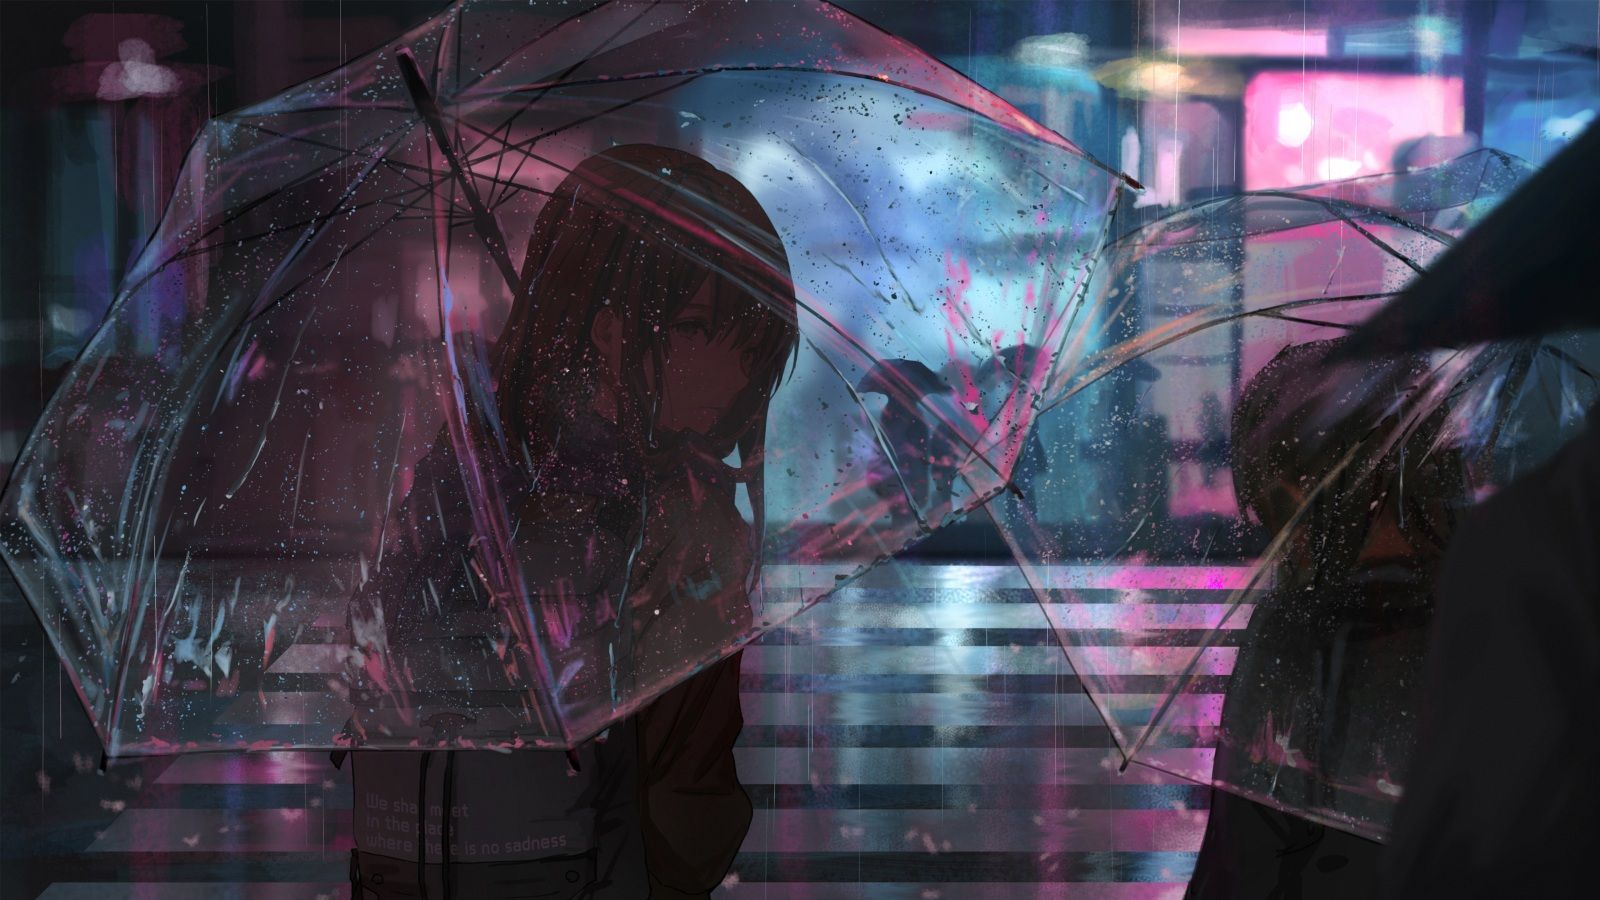 Wallpaper 4k Anime Girl In Rain With Umbrella 4k 4k Wallpaper, Anime Girl Wallpaper, Anime Wallpaper, Artist Wallpaper, Artwork Wallpaper, Digital Art Wallpaper, Hd Wallpaper, Rain Wallpaper, Umbrella Wallpaper